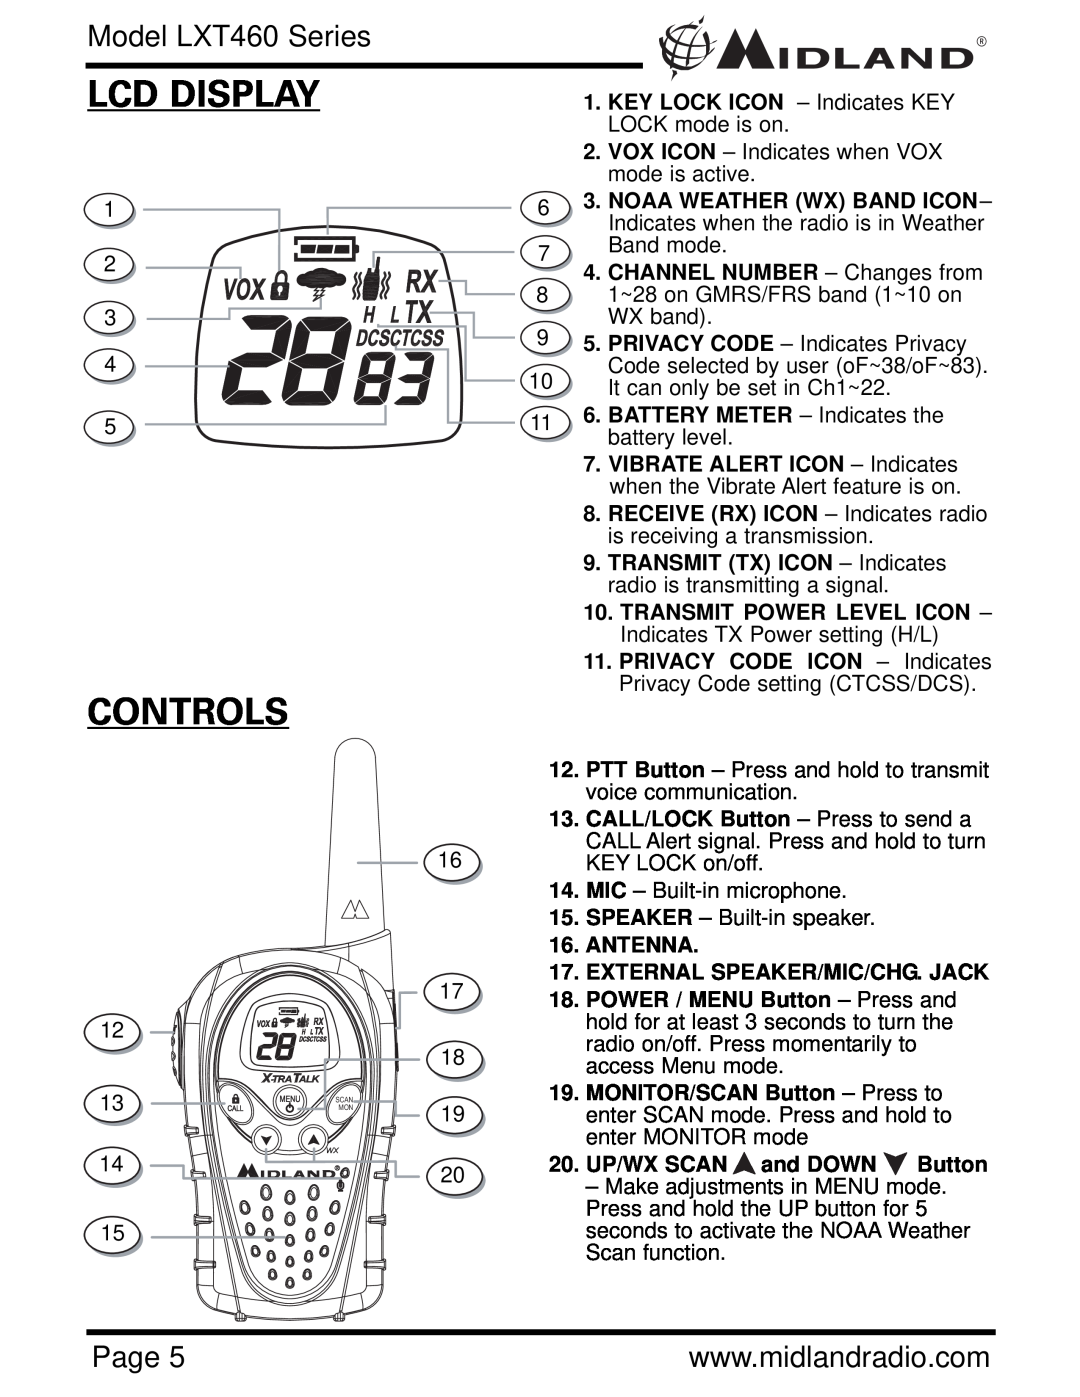 Midland Radio owner manual Lcd Display, Controls, Model LXT460 Series, Page 